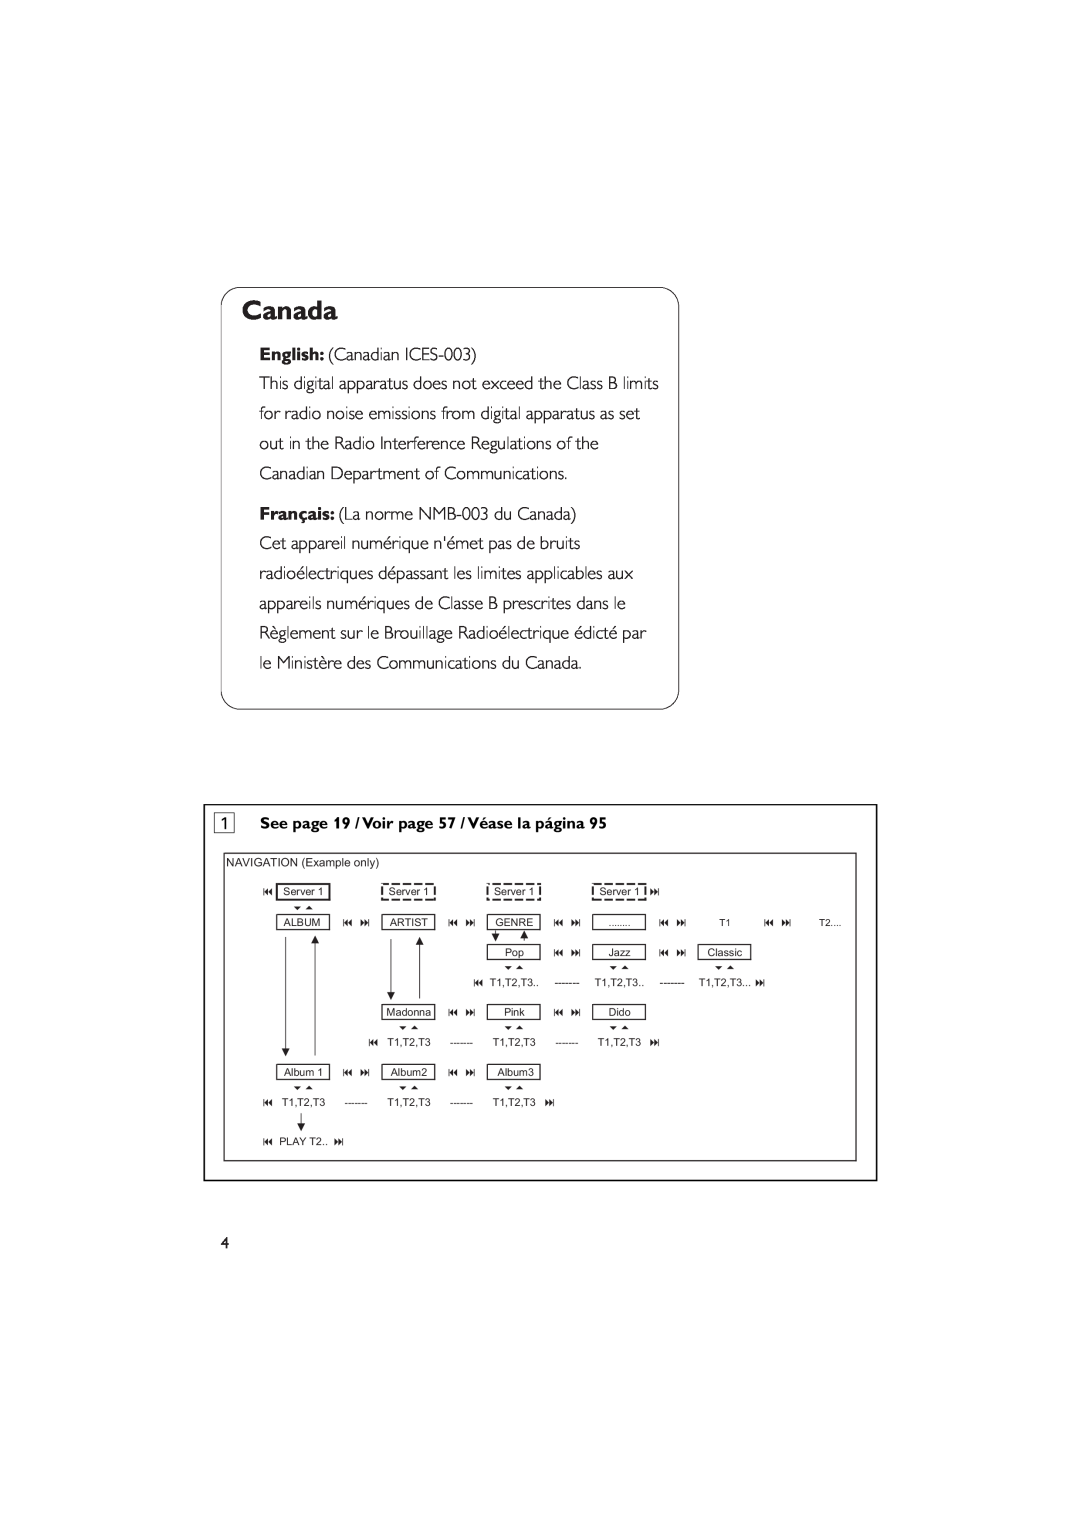 Philips MCW770 manual Canada, English: Canadian ICES-003, 1See page 19 / Voir page 57 / Véase la página 